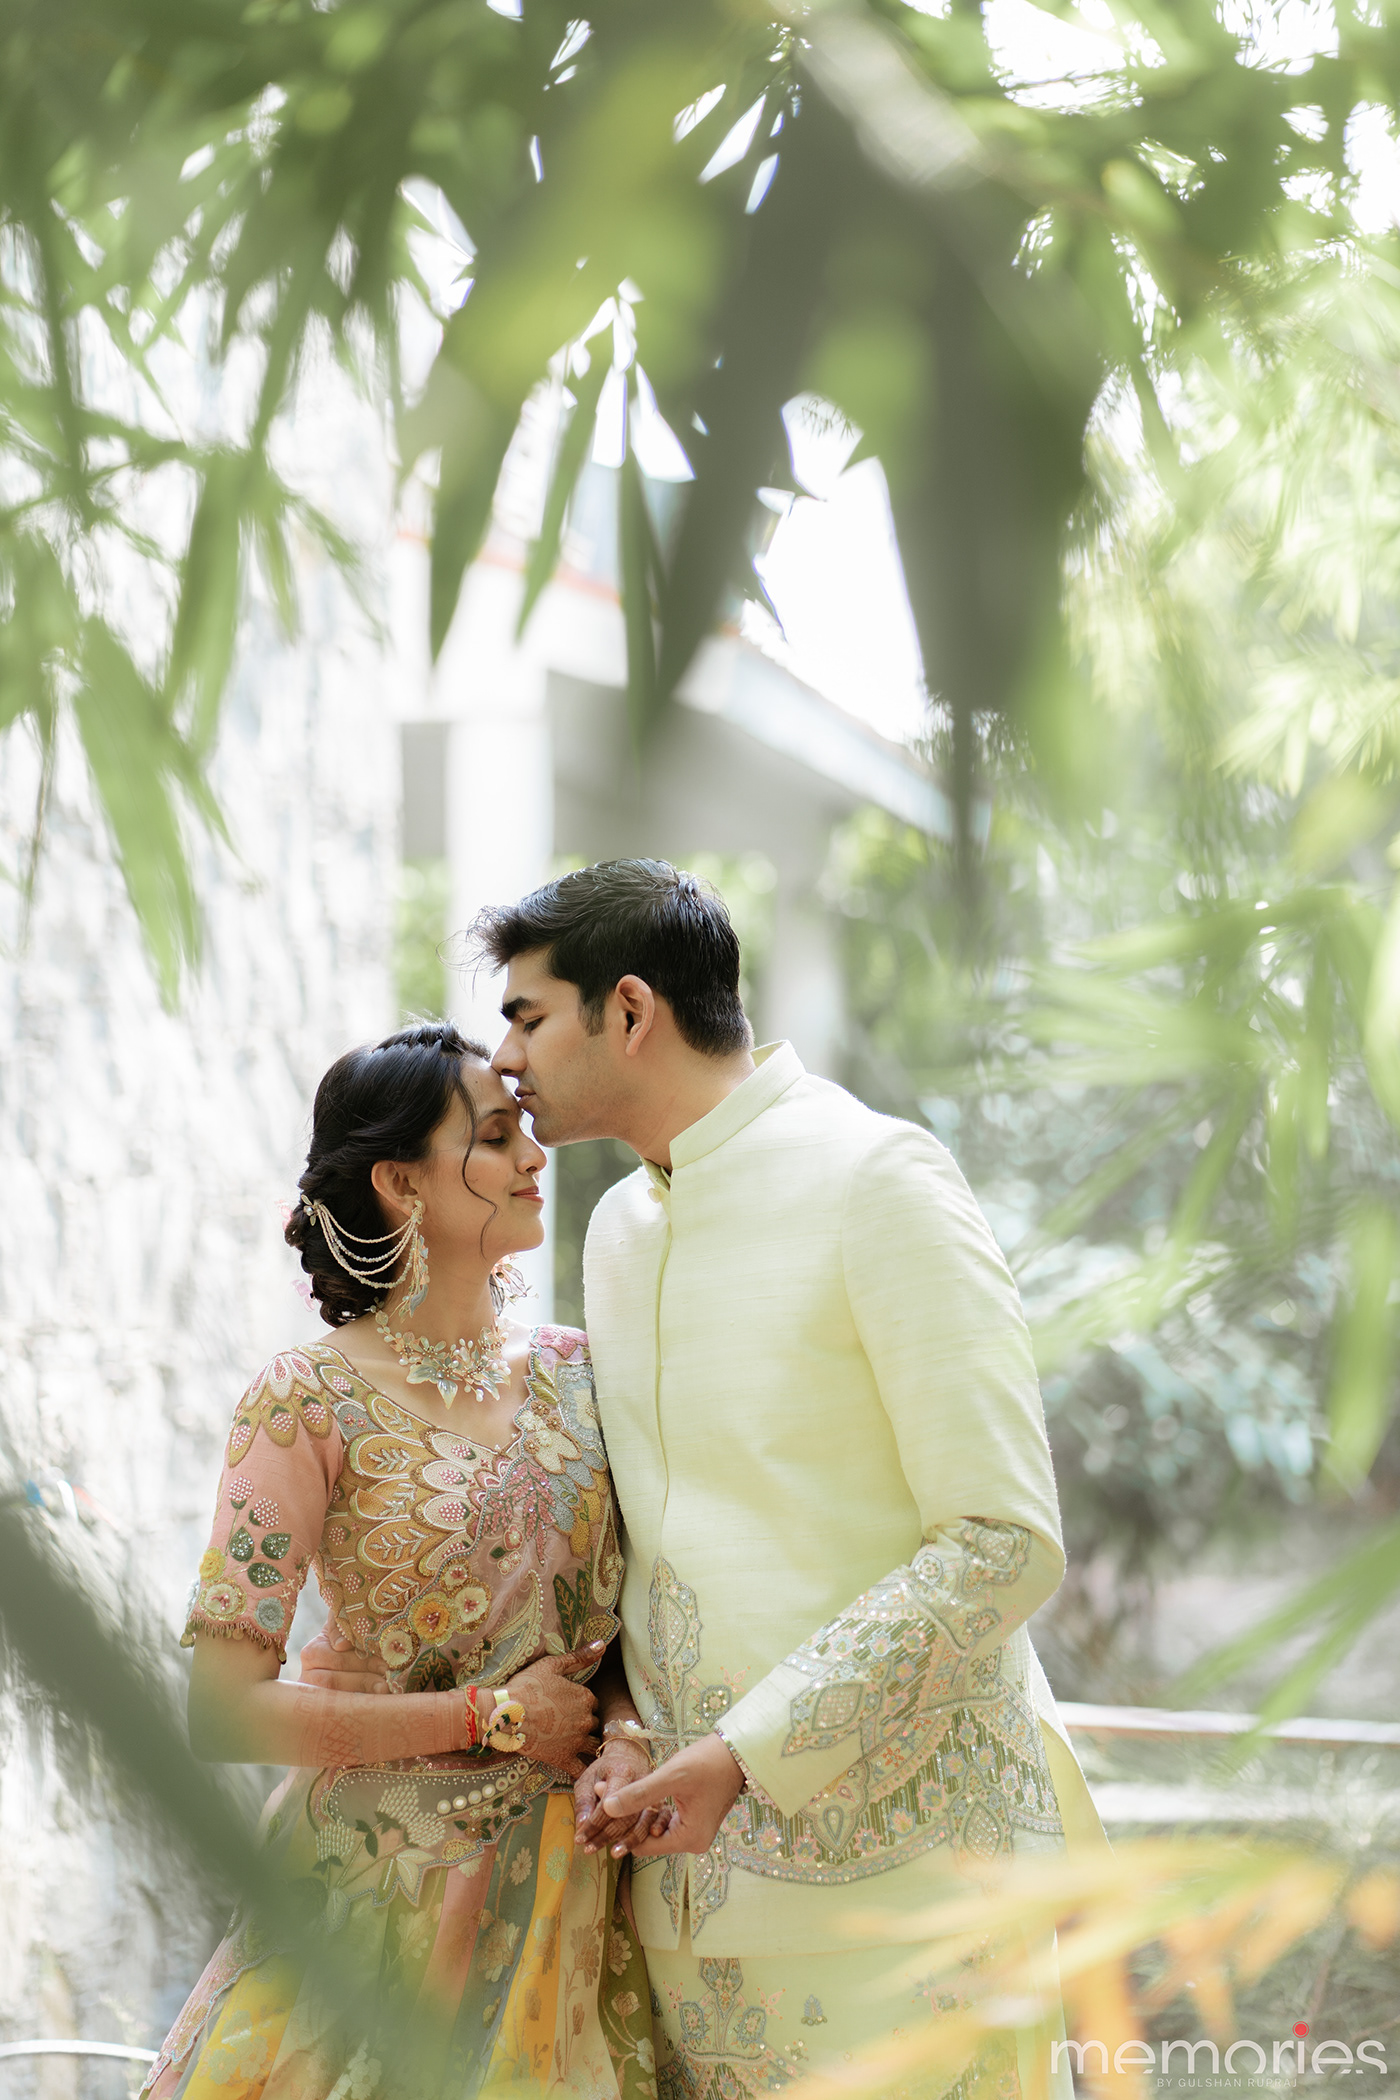 wedding haldi Wedding Photography photographer portrait memories couple intimacy Fun memoriesbygulshanrupraj